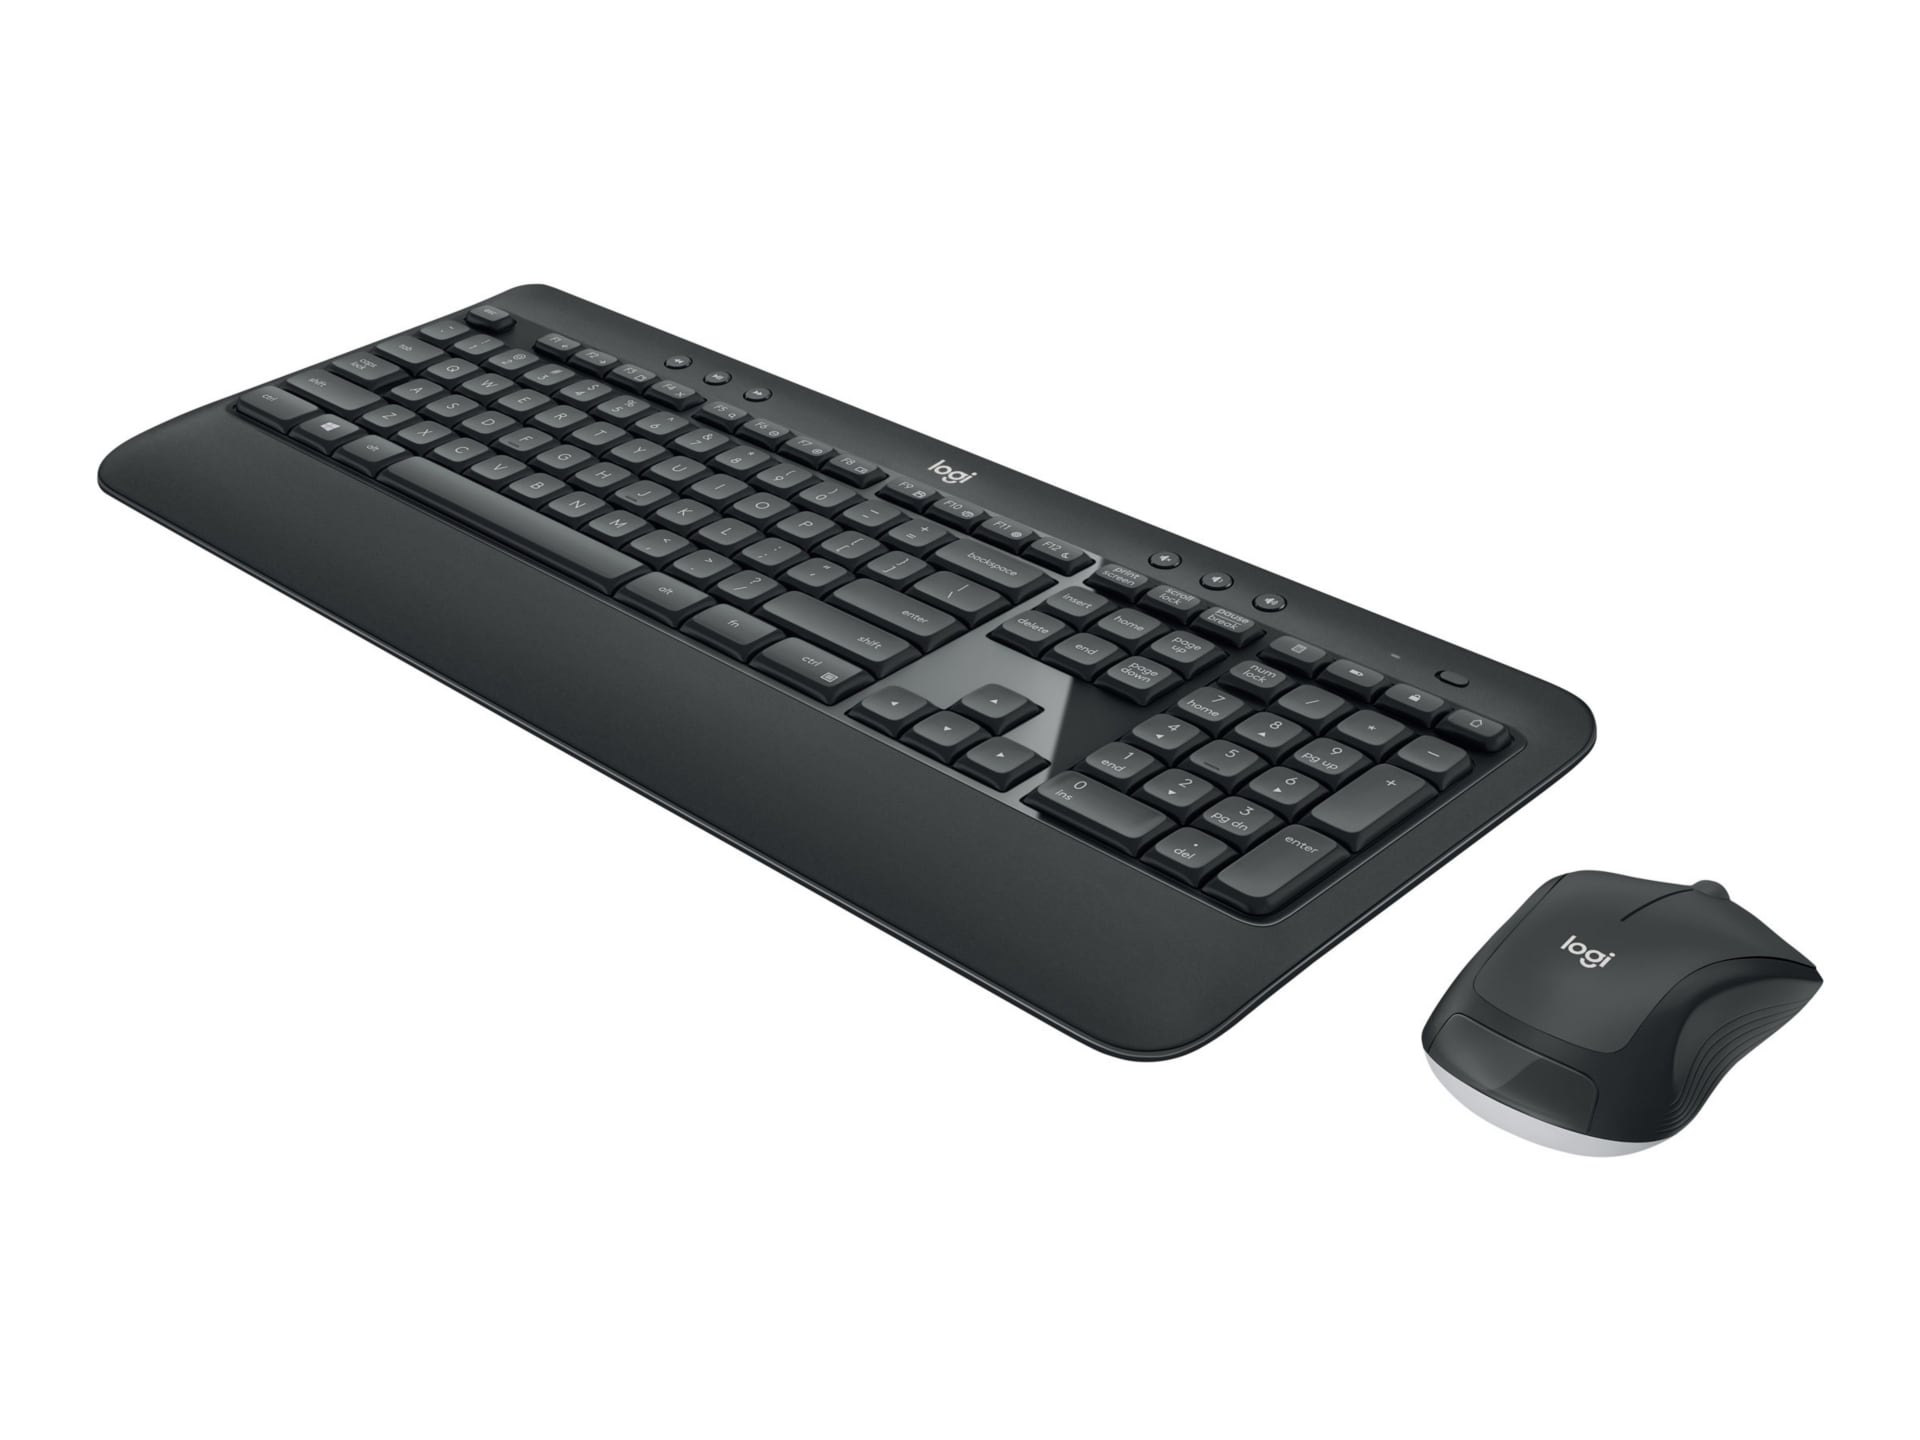 Logitech MK540 Advanced - keyboard and mouse set Input Device